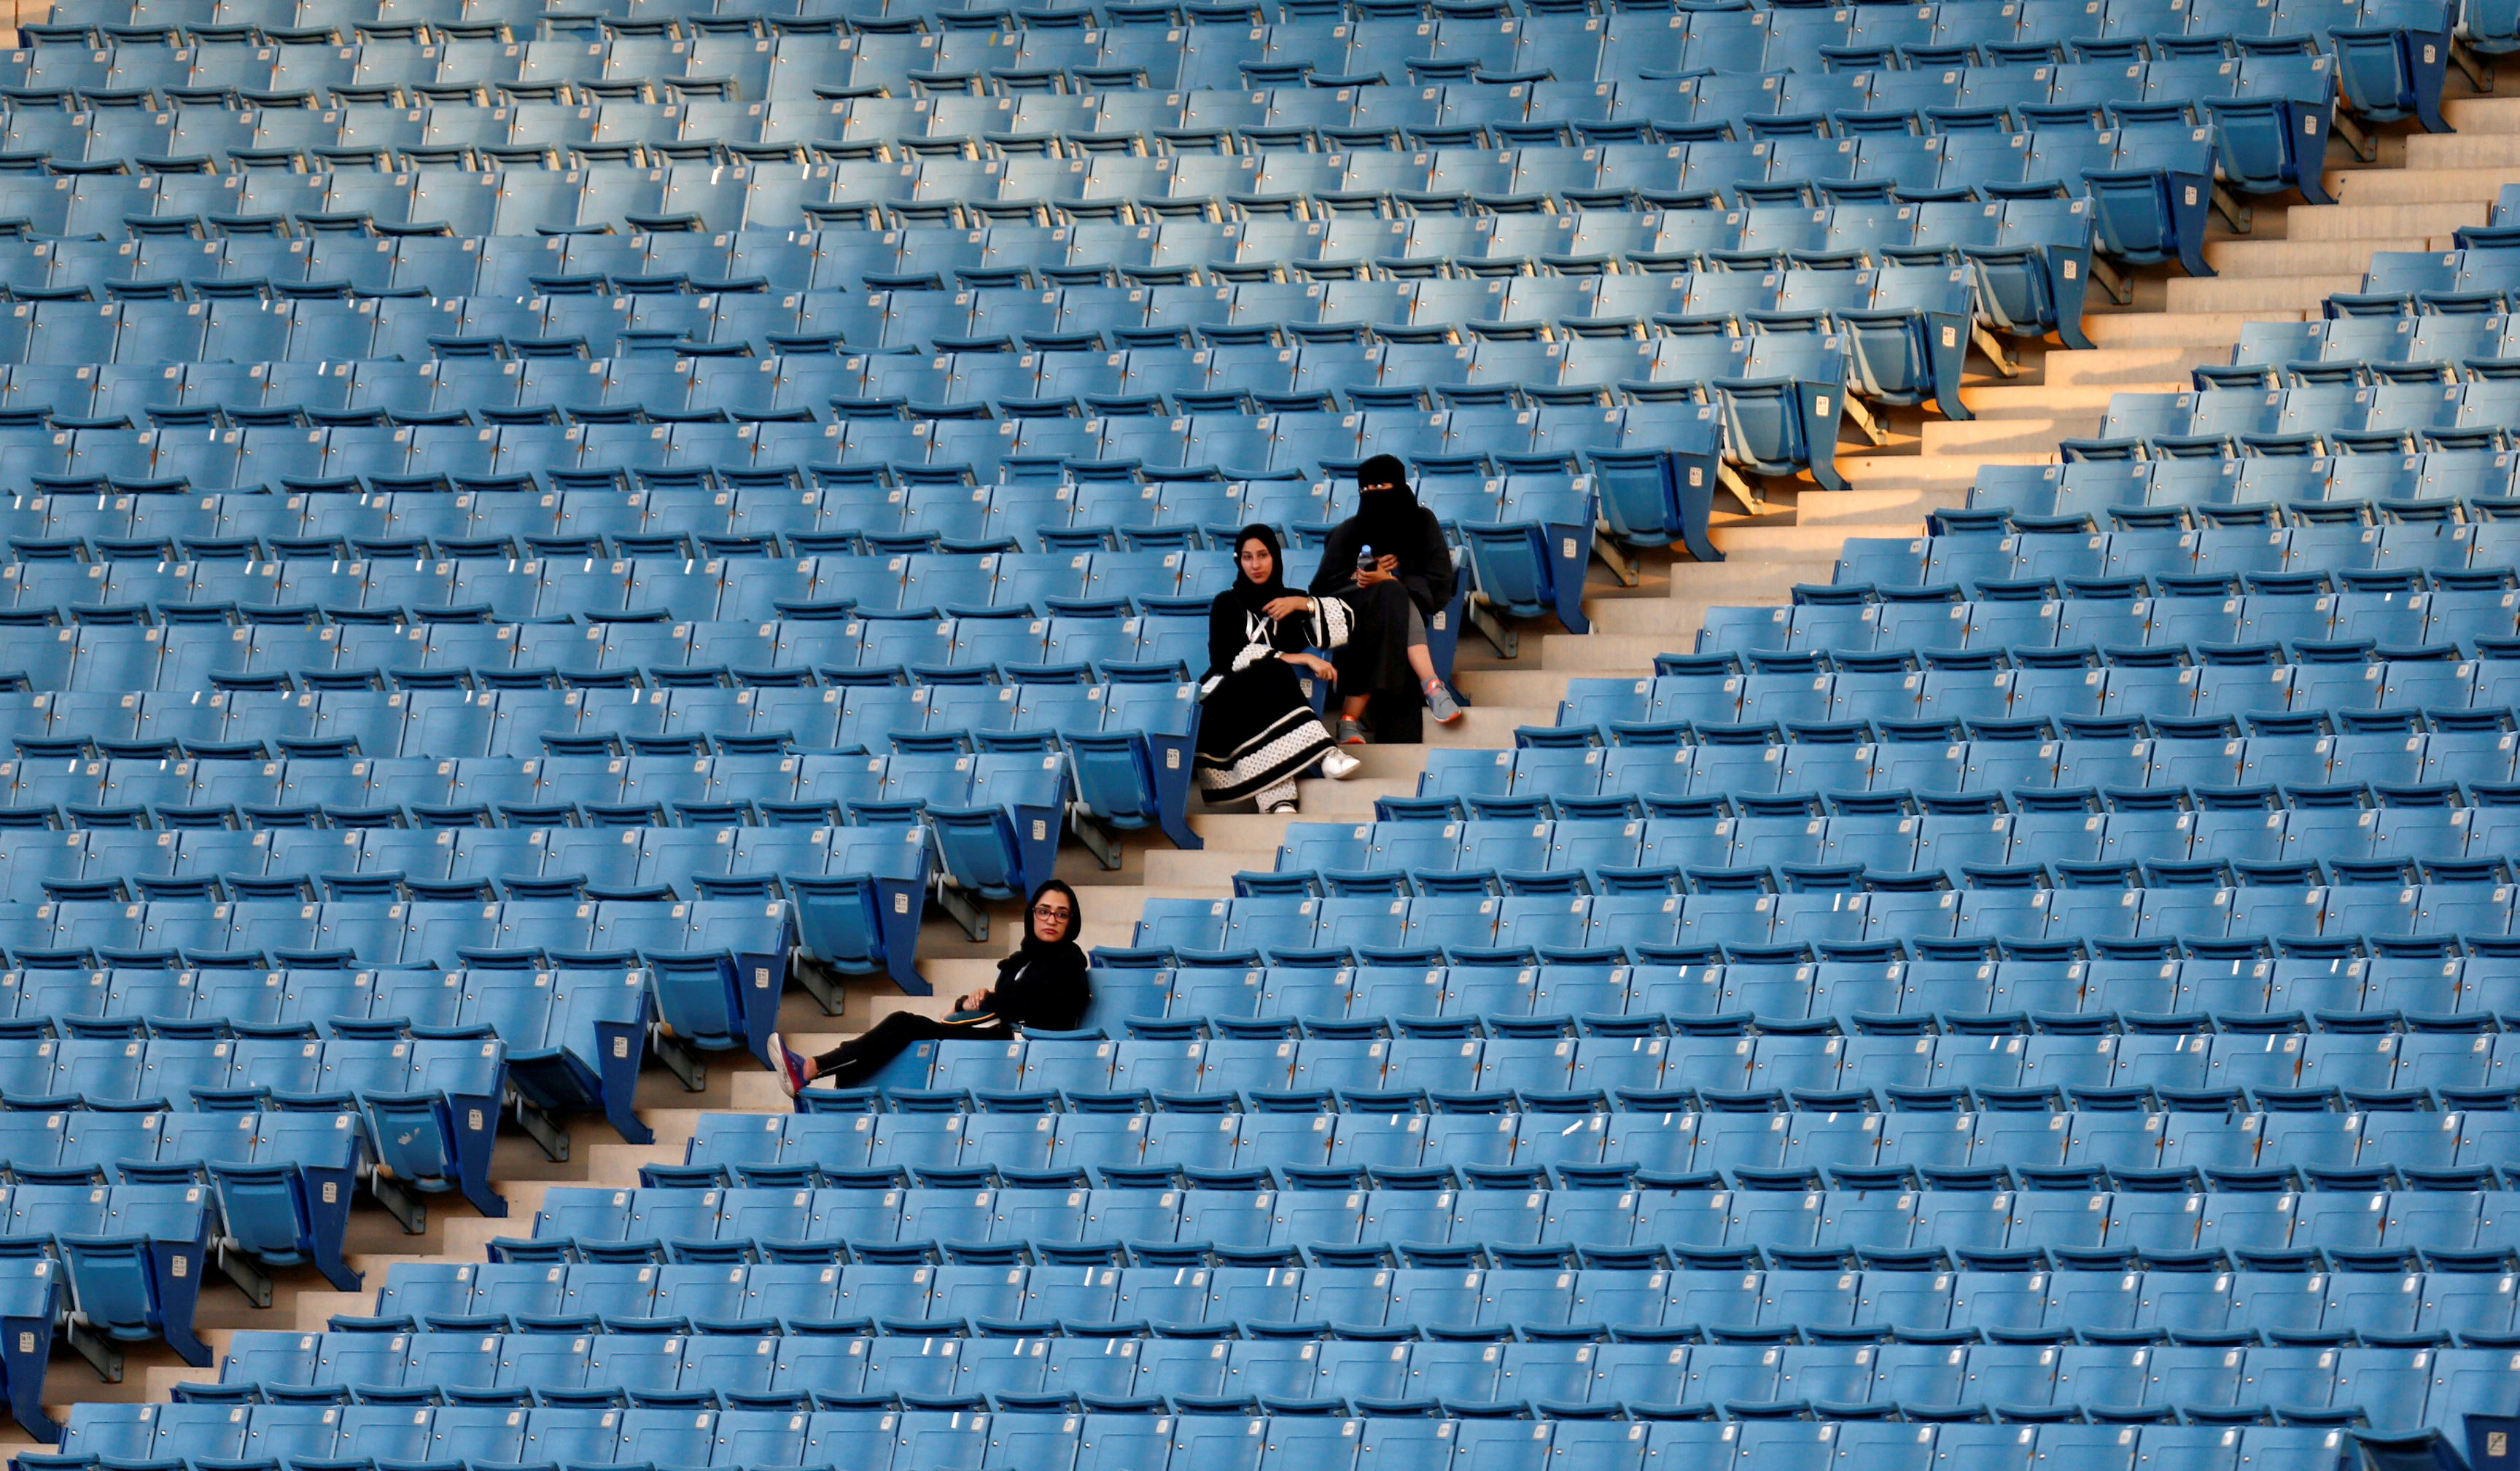 Women allowed into stadium as Saudi Arabia promotes national pride